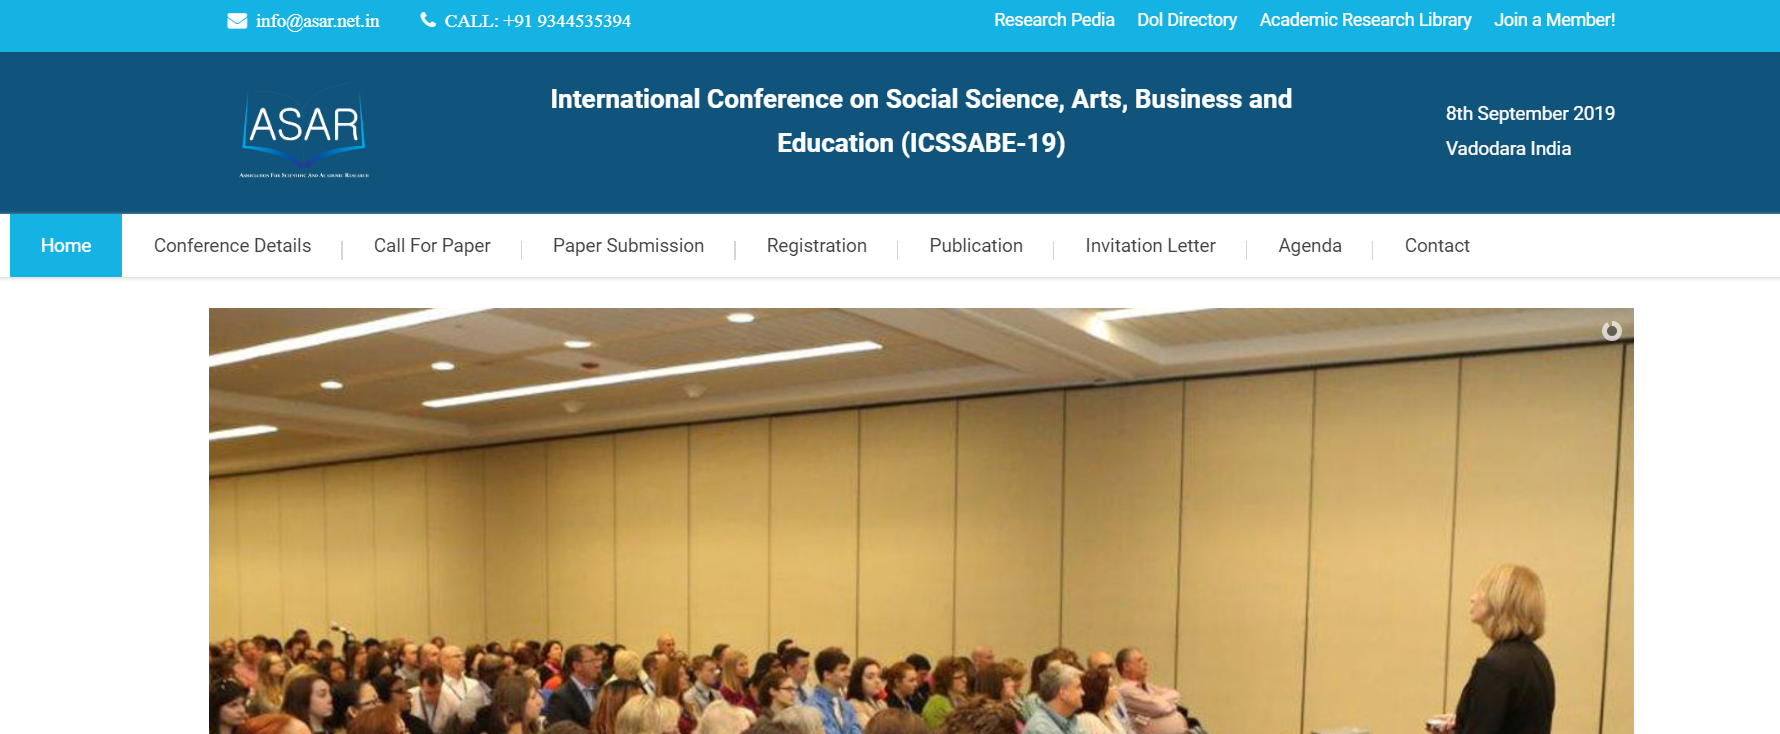 International Conference on Social Science, Arts, Business and Education (ICSSABE-19), Vadodara, Gujarat, India